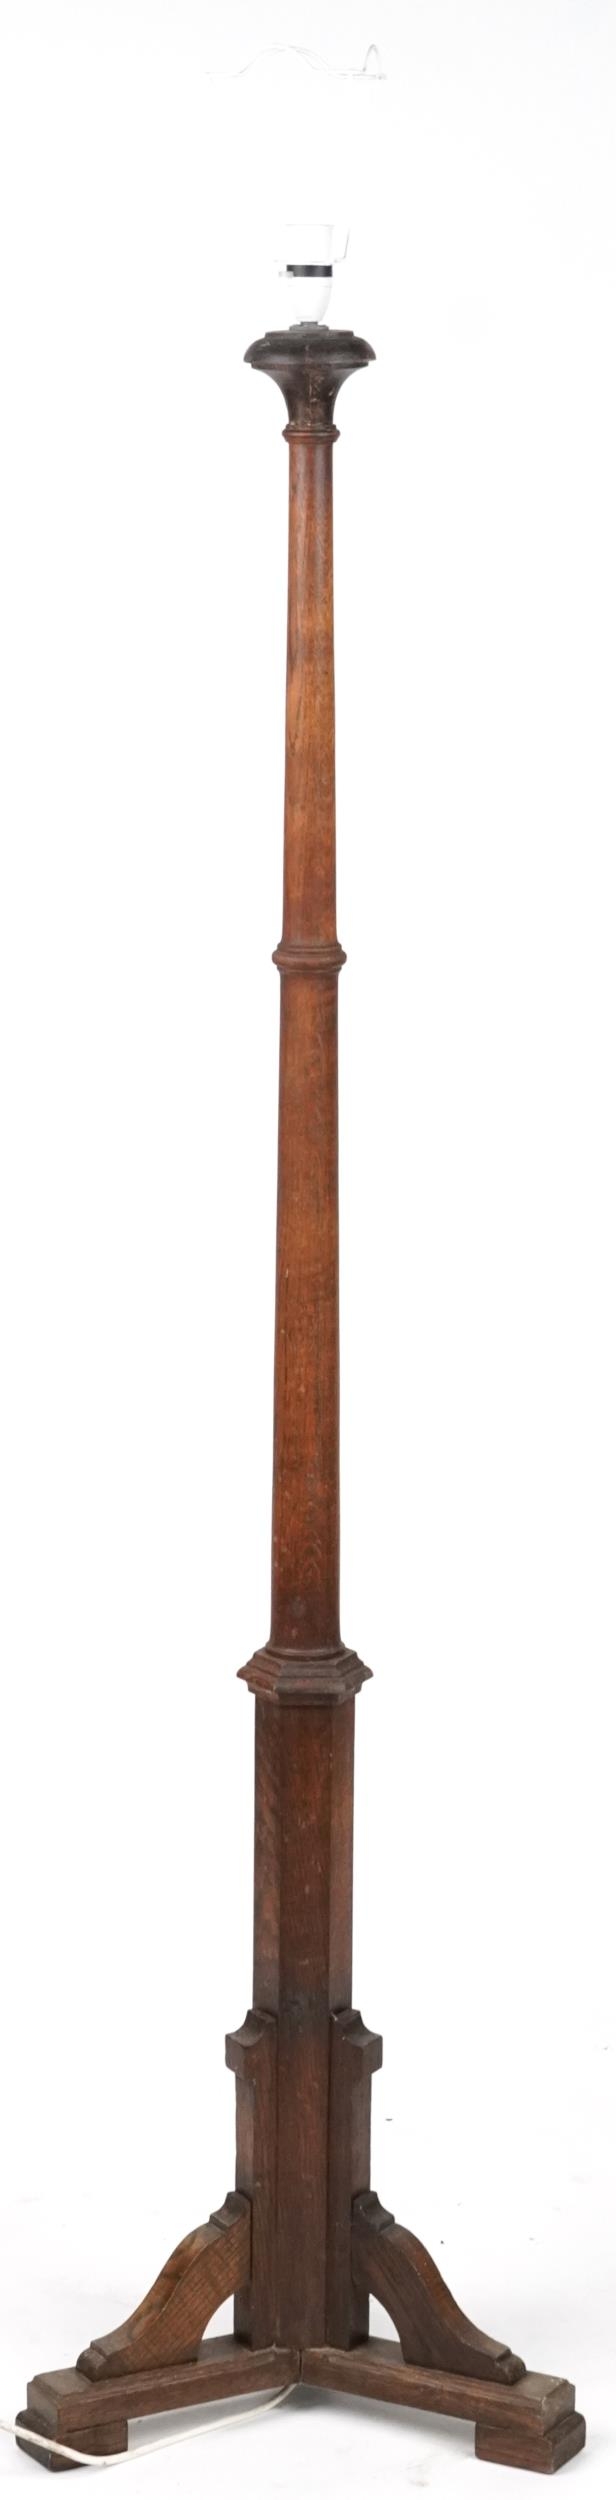 Arts & Crafts oak standard lamp, 160cm high - Image 2 of 2